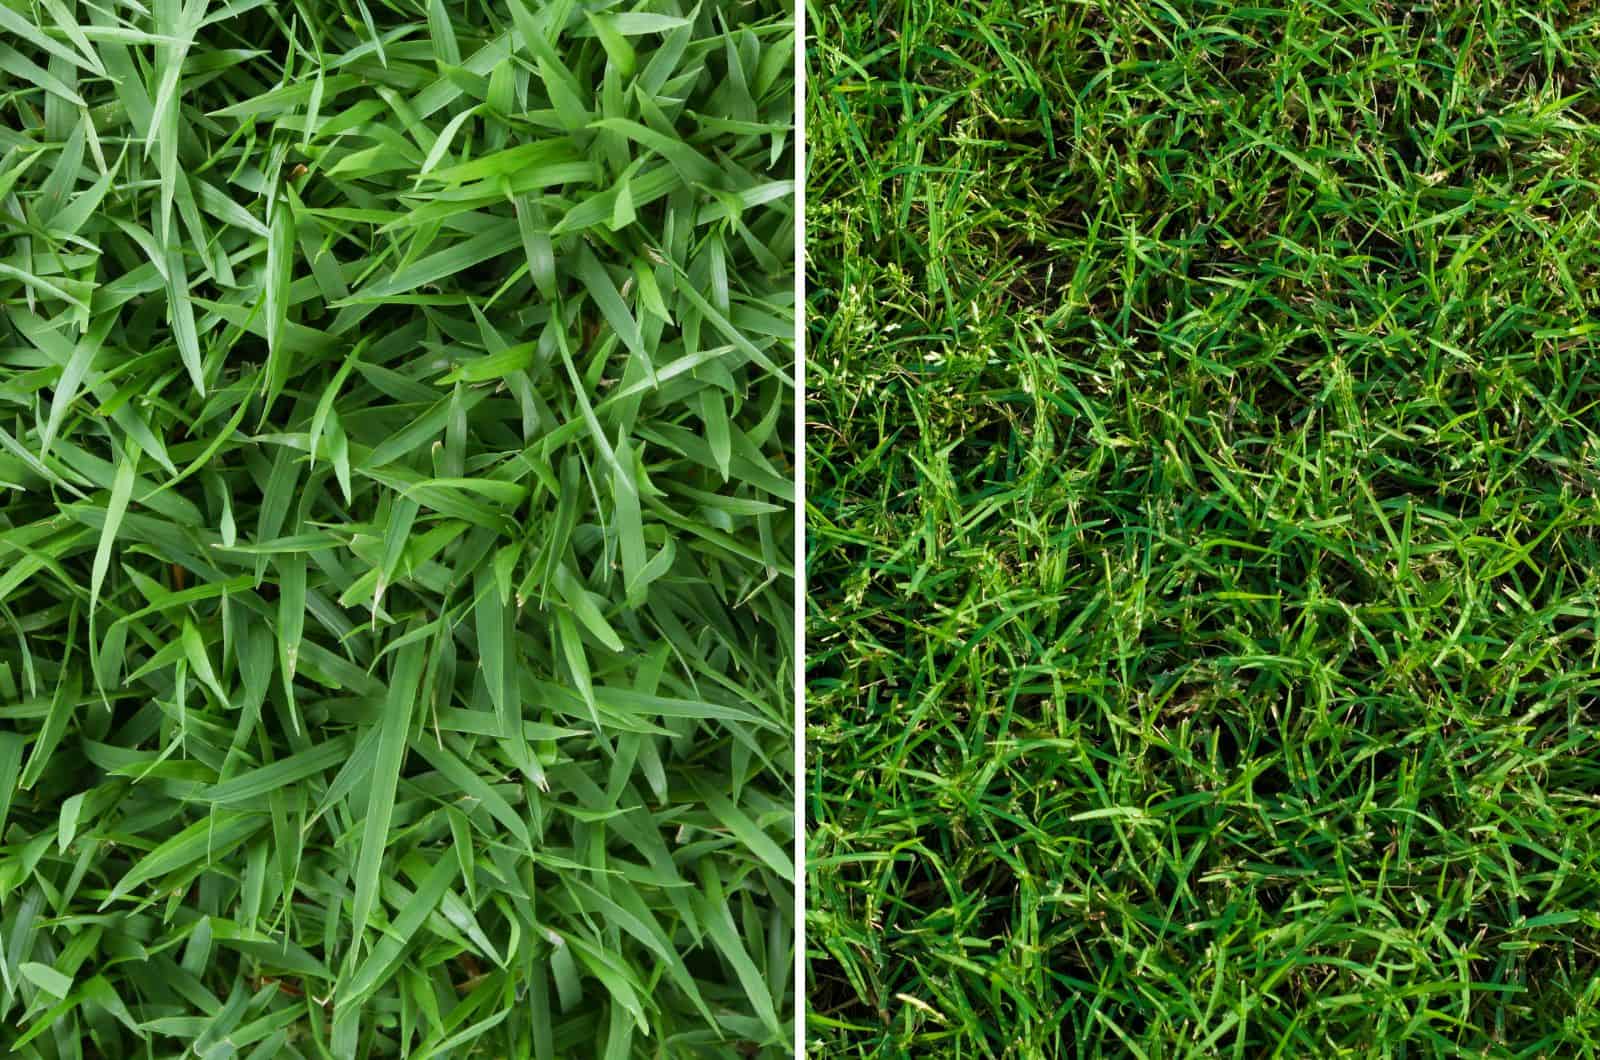 Zoysia and Bermuda grass side by side